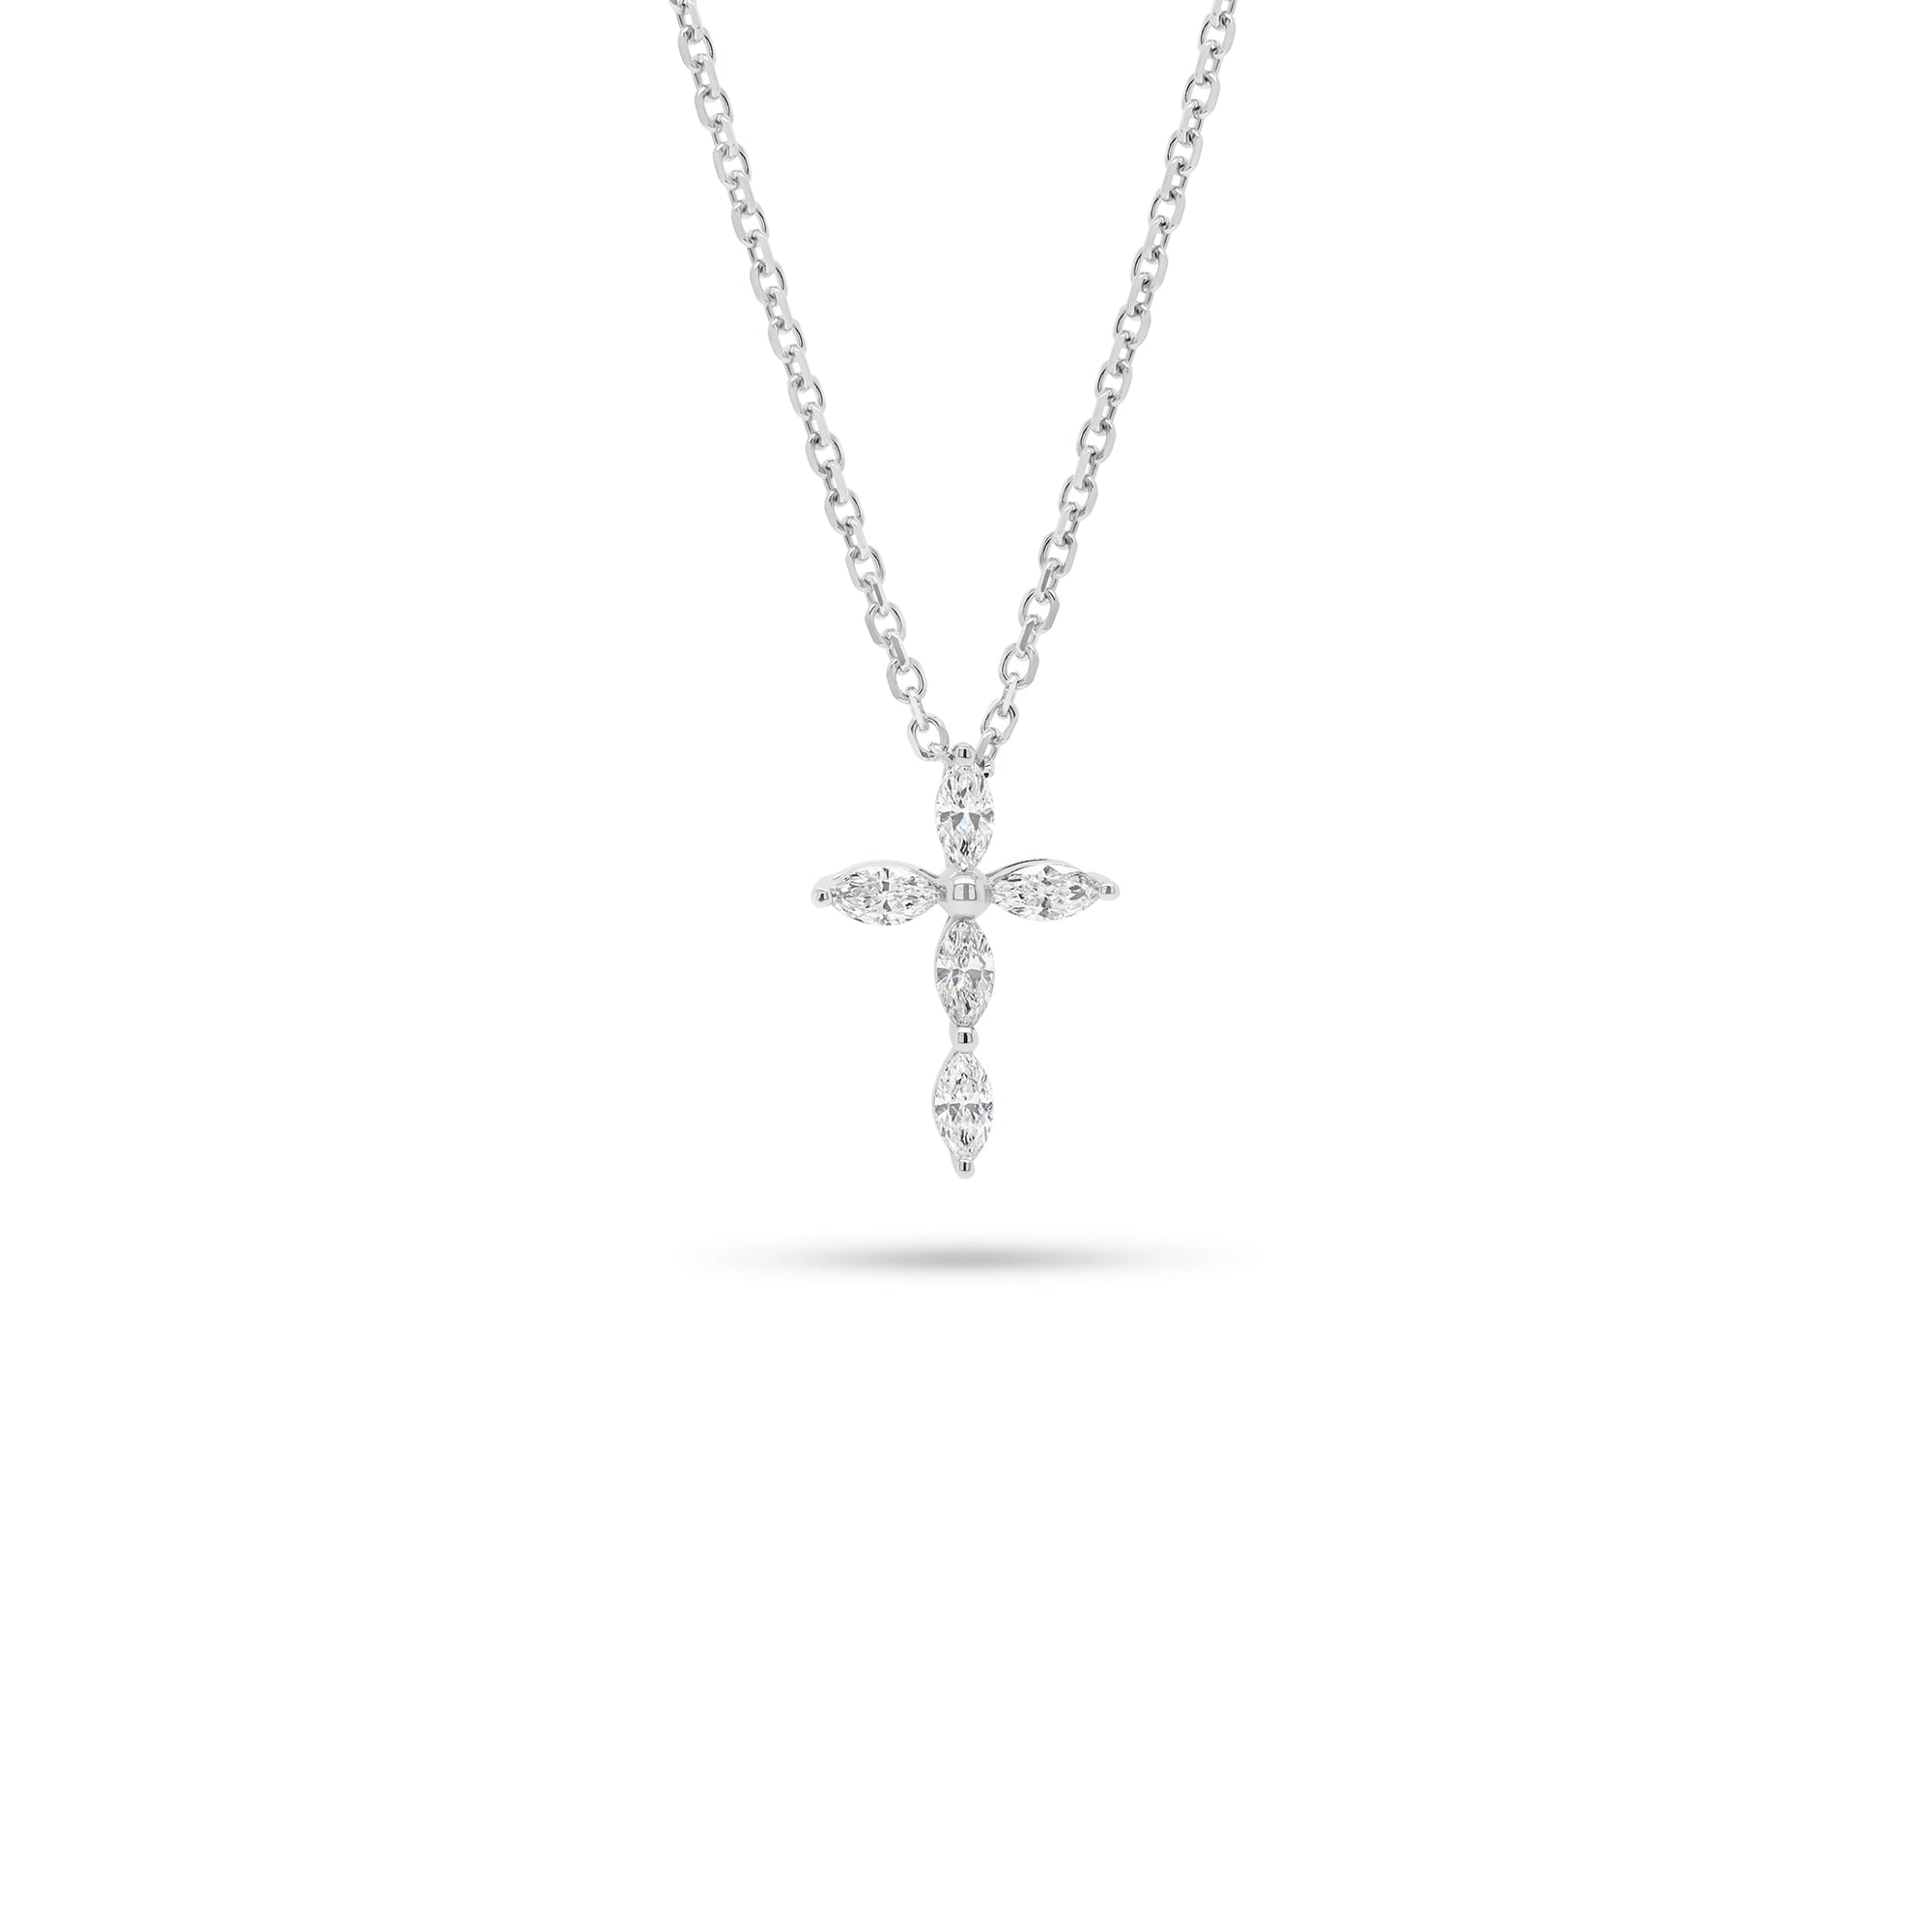 Marquise Diamond Cross Pendant Necklace - 18K gold weighing 0.33 grams (pendant)  - 14K gold weighing 1.60 grams (necklace)  - 5 marquise-shaped diamonds weighing 0.18 carats